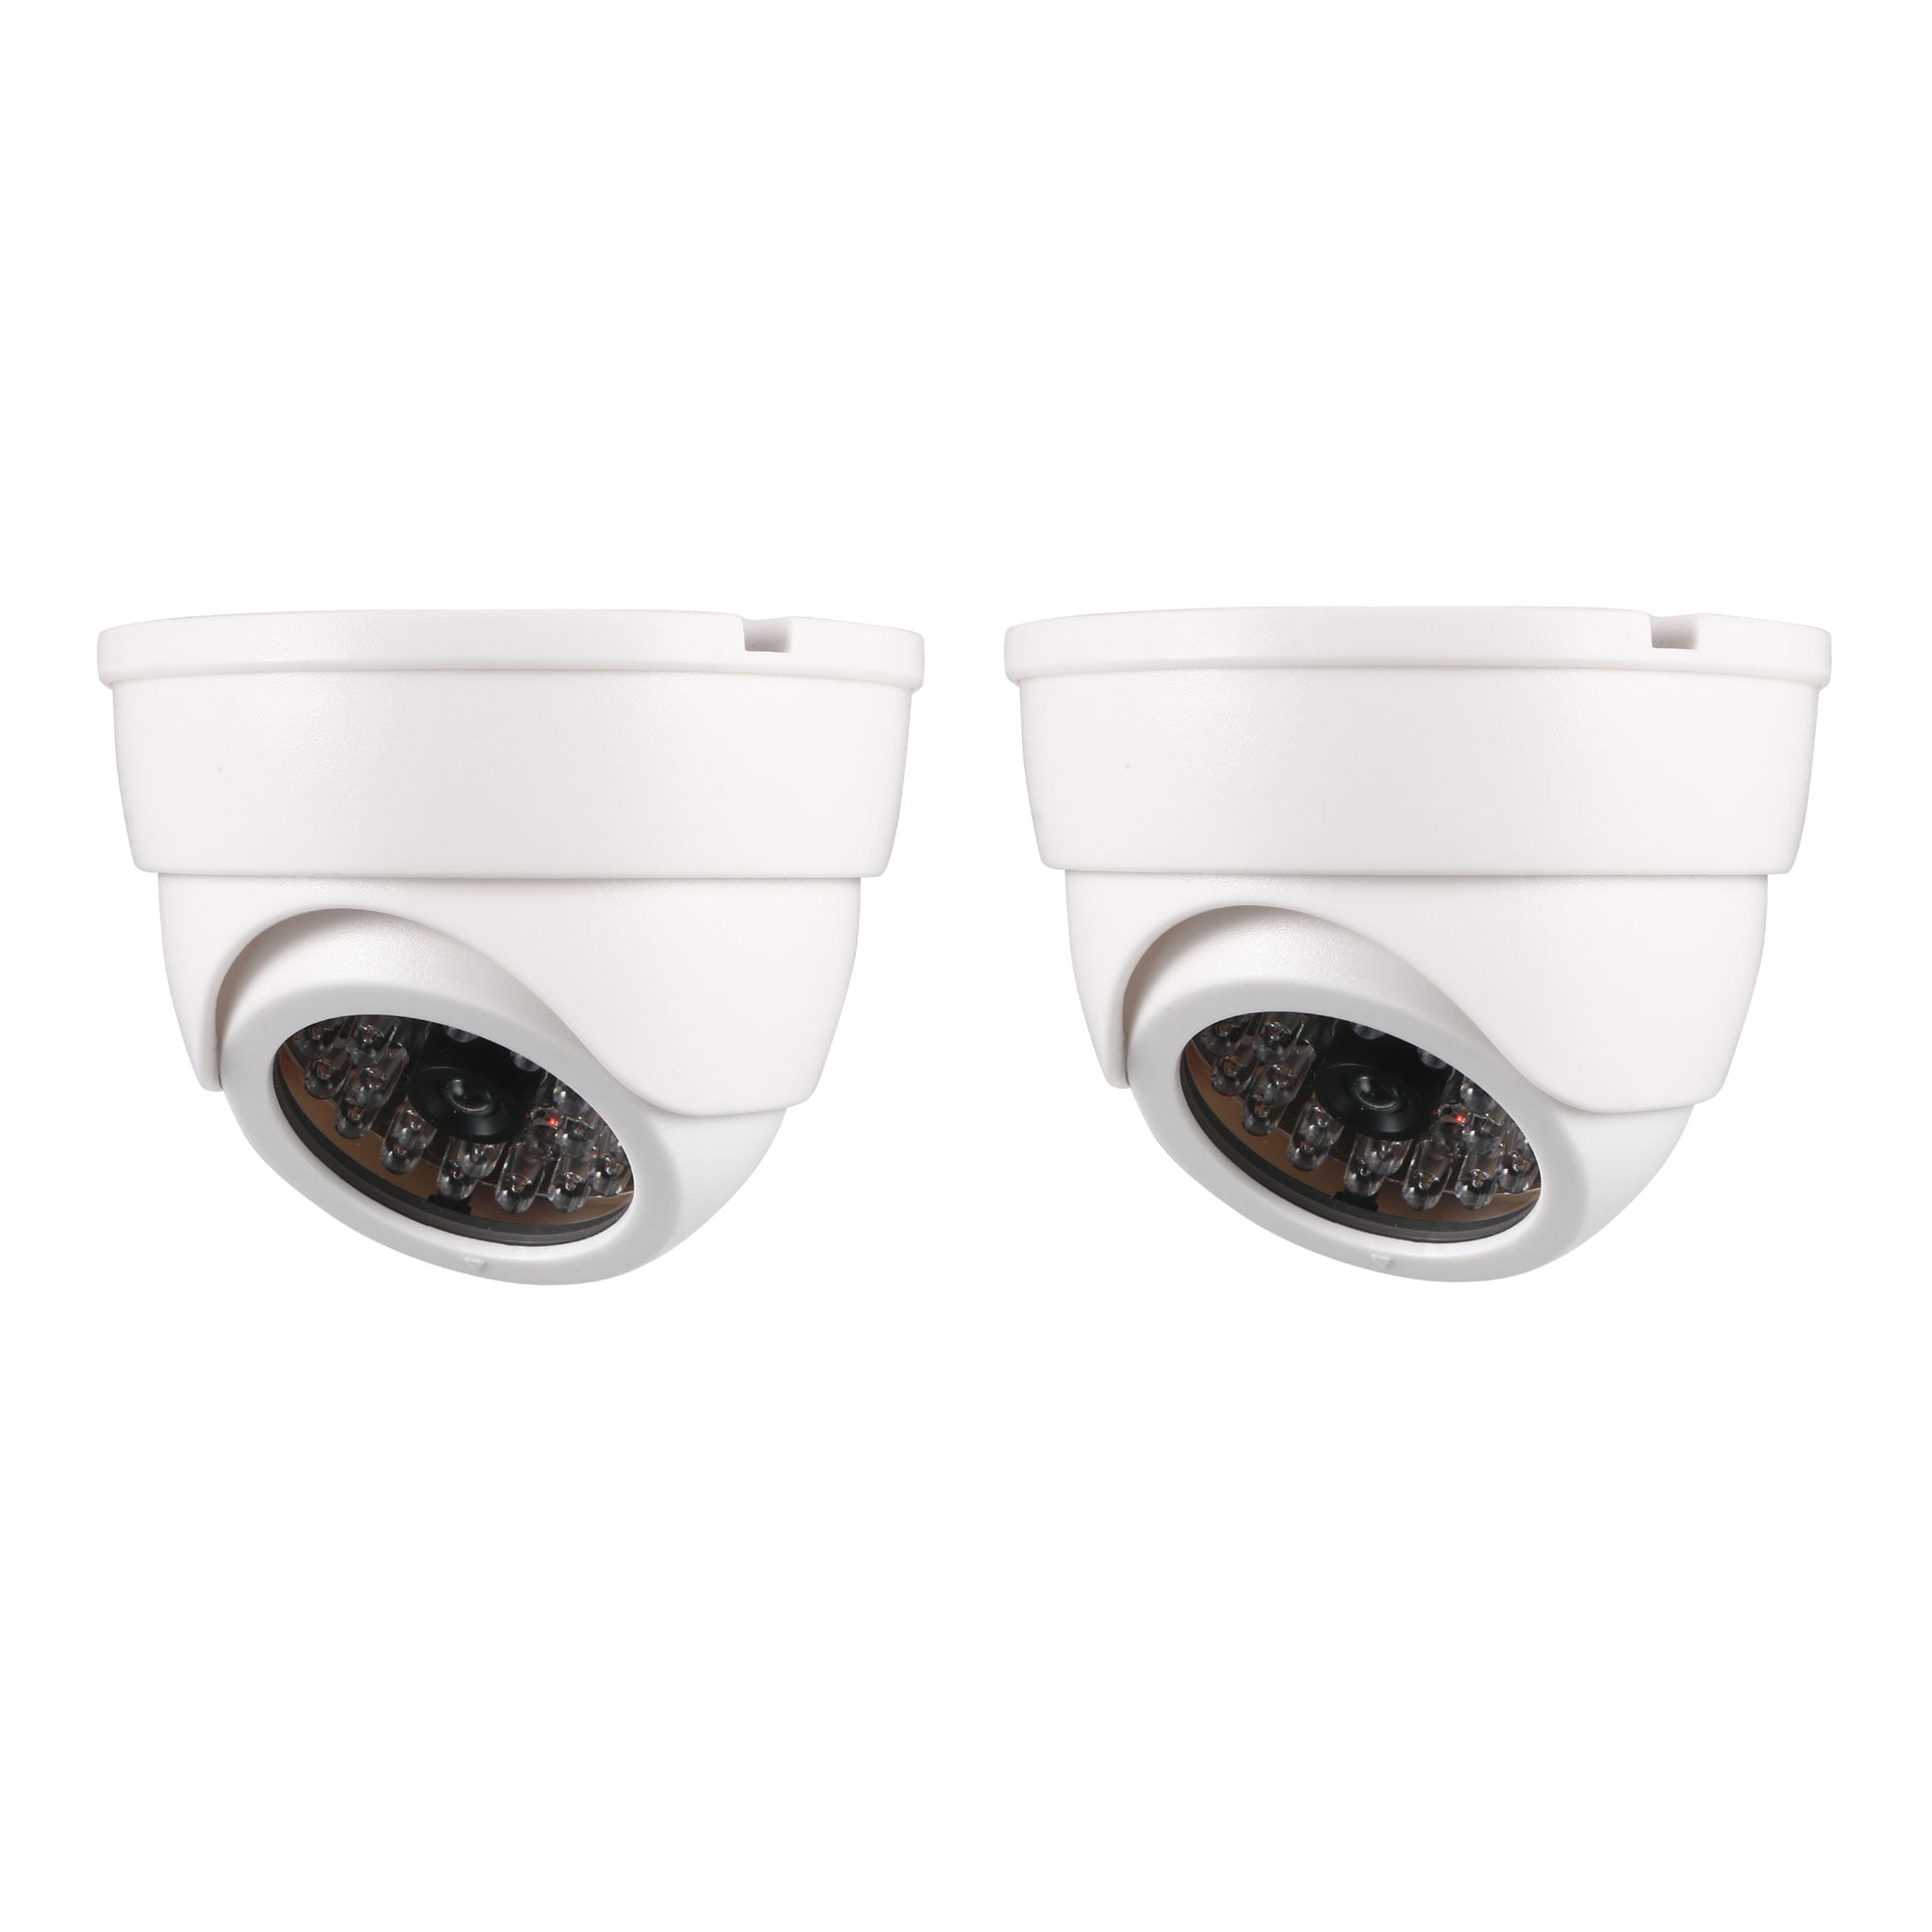 UniquExceptional UDC8-white Fake Dome Security Cameras with 30 Illuminating Nightime LEDs Indoor Dummy